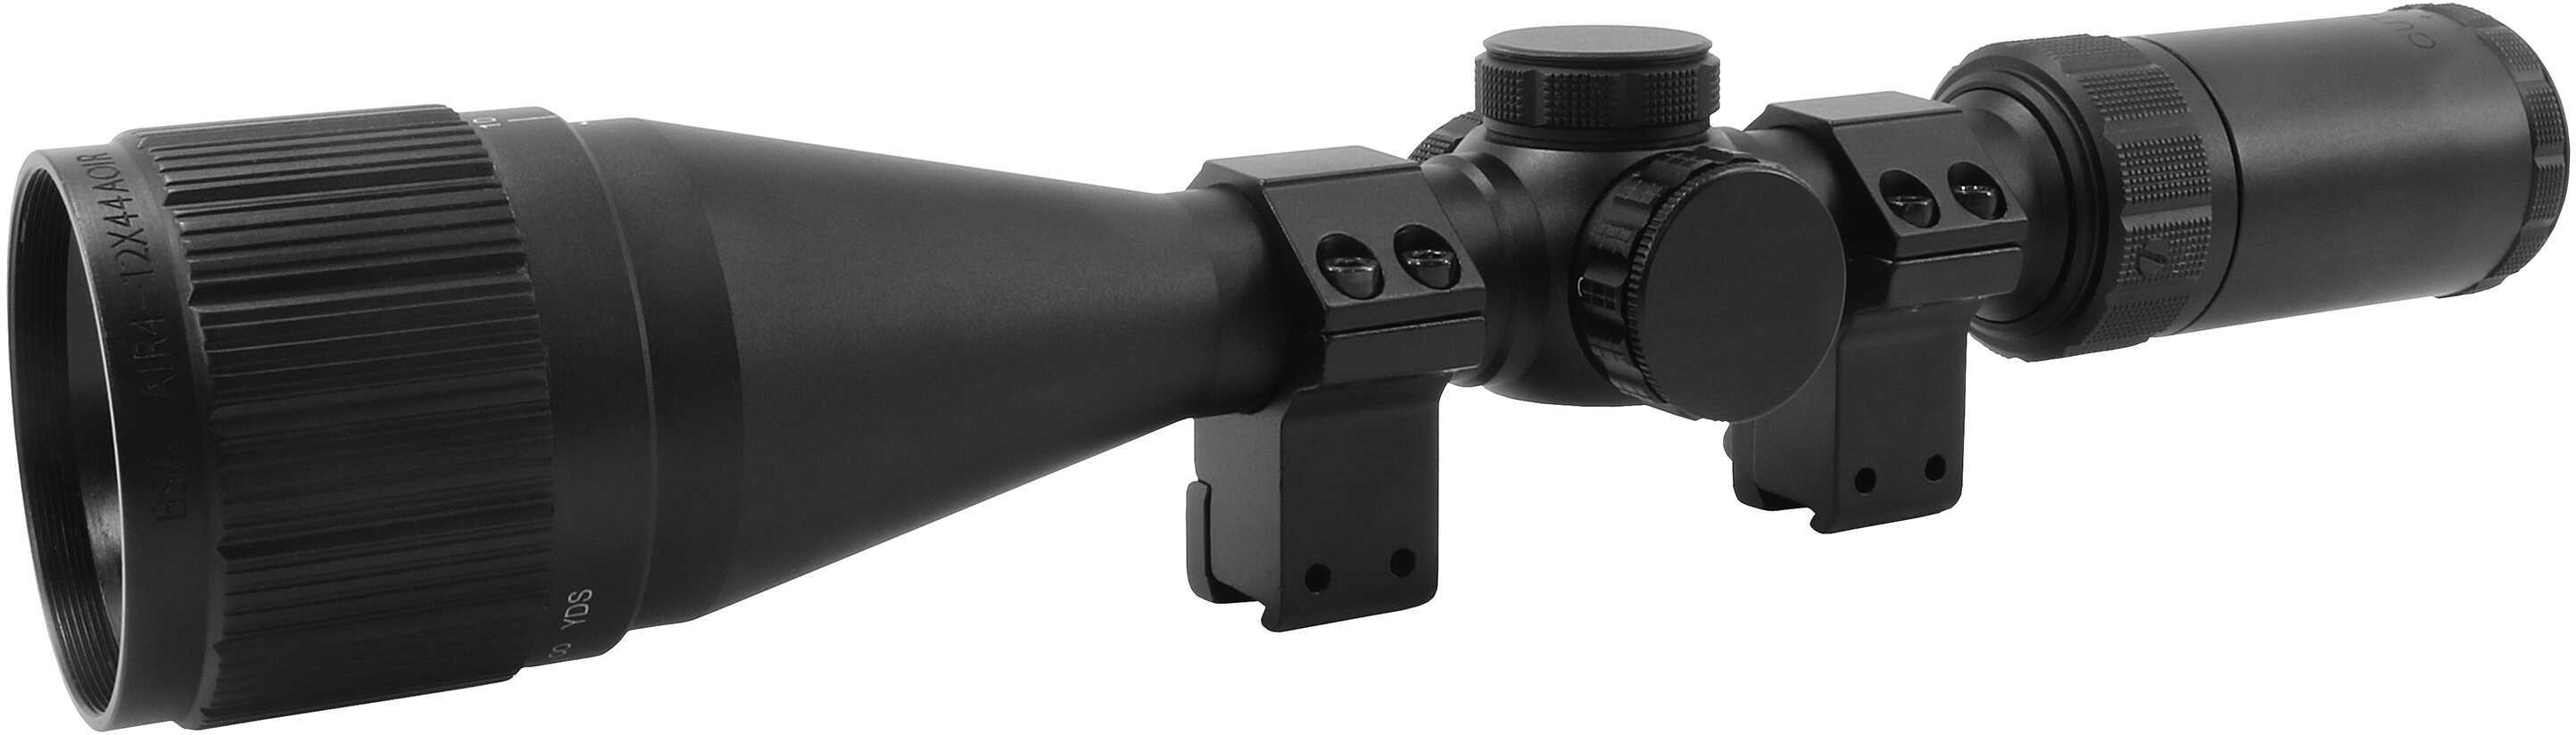 Bsa Outlook Air 4-12x Mag. 44mm Obj Illuminated Mil-Dot Rifle Scope Adjustable - Clam Pack